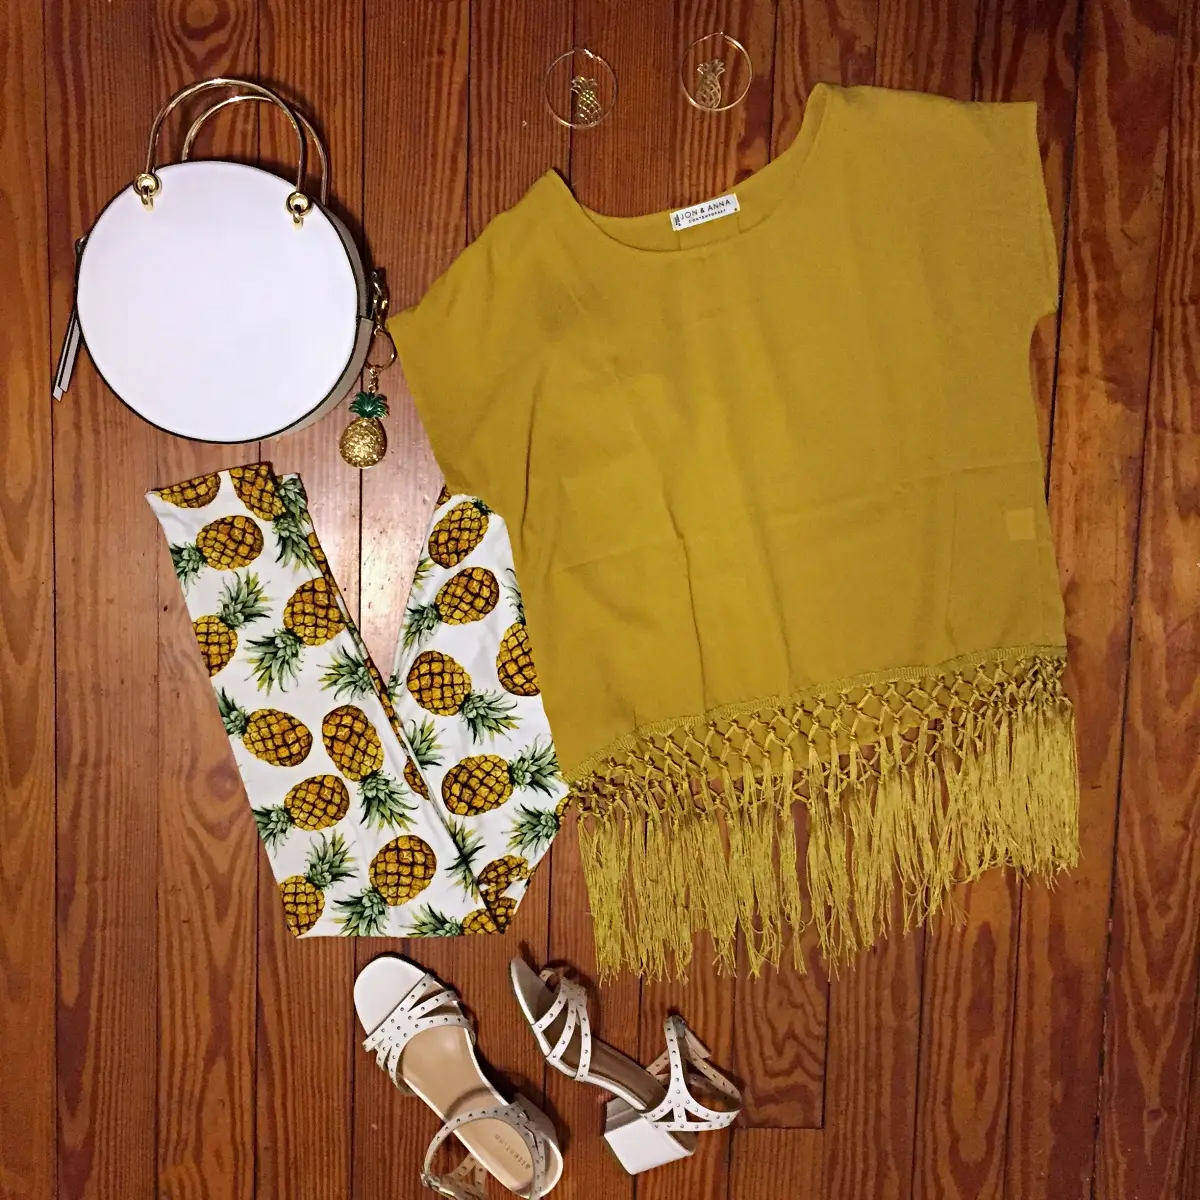 pineapple leggings outfit